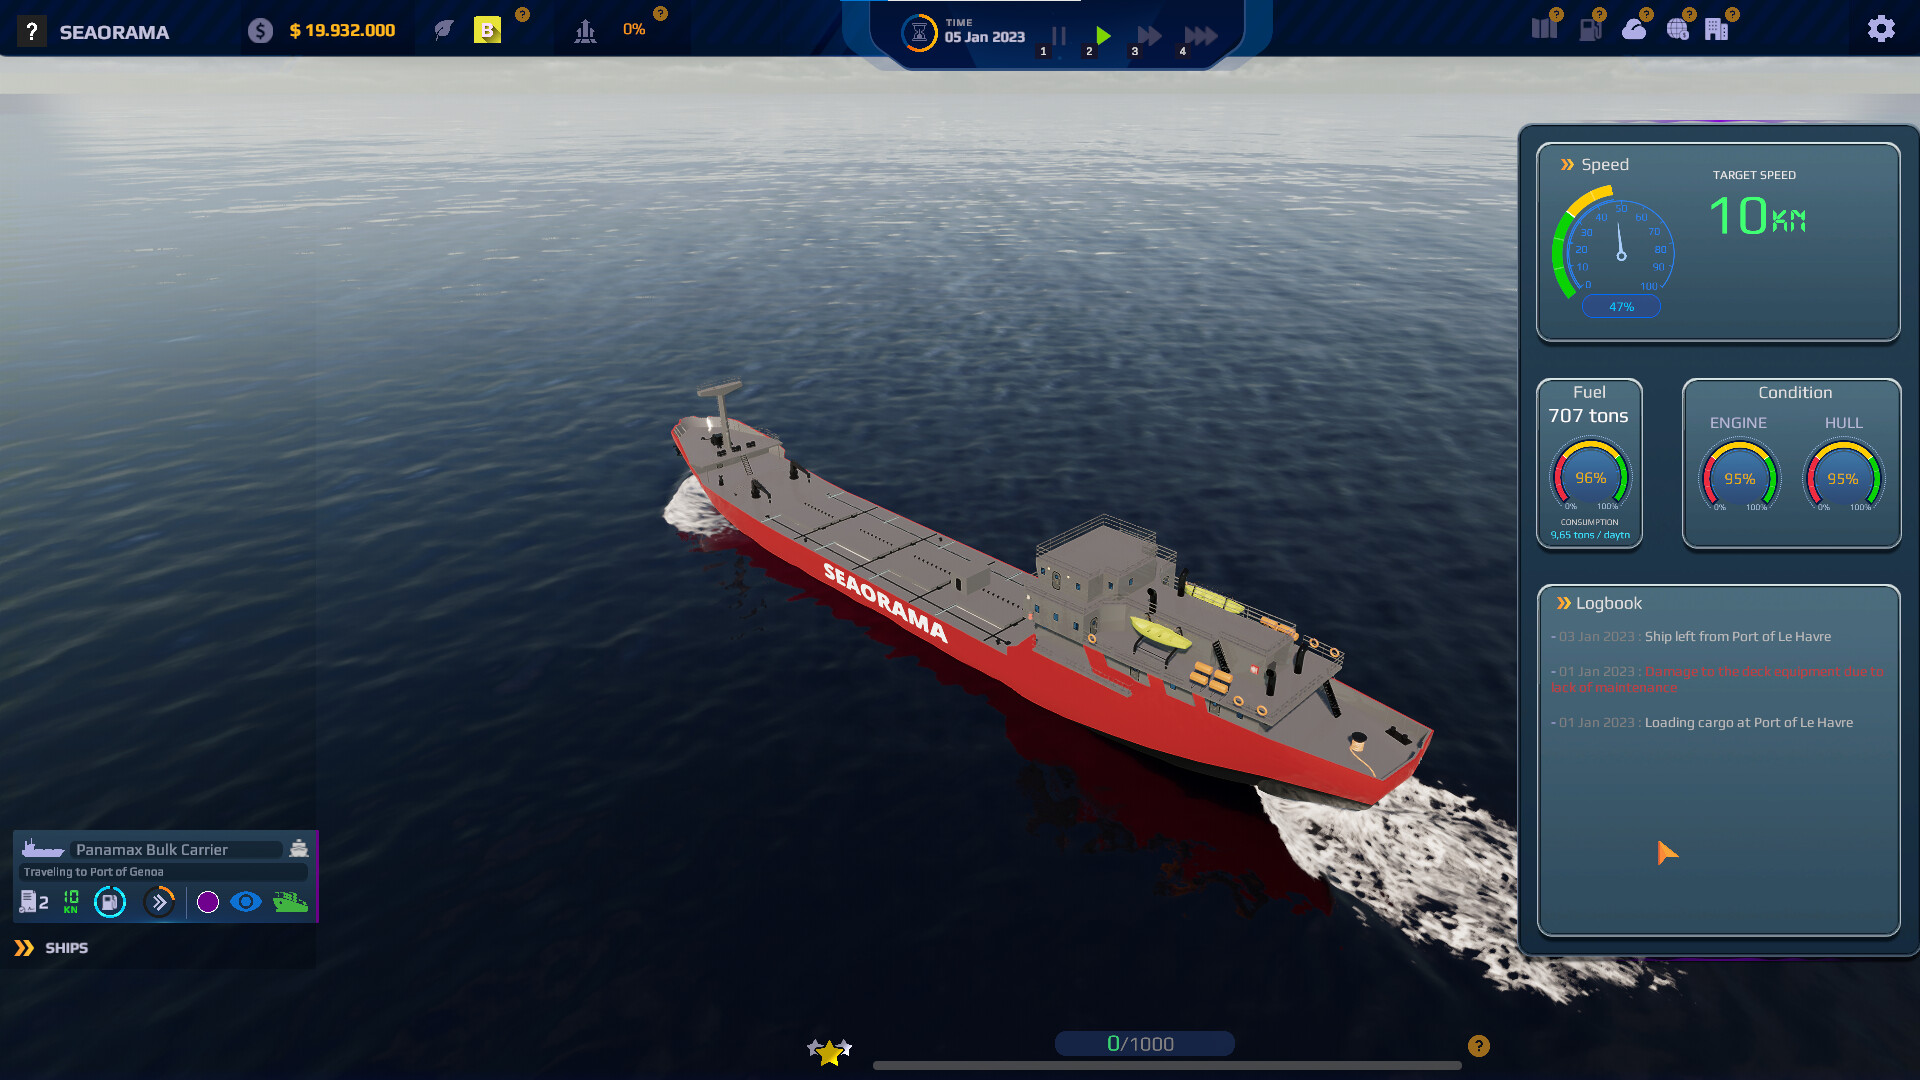 SeaOrama: World of Shipping Steam CD Key 16.92 $